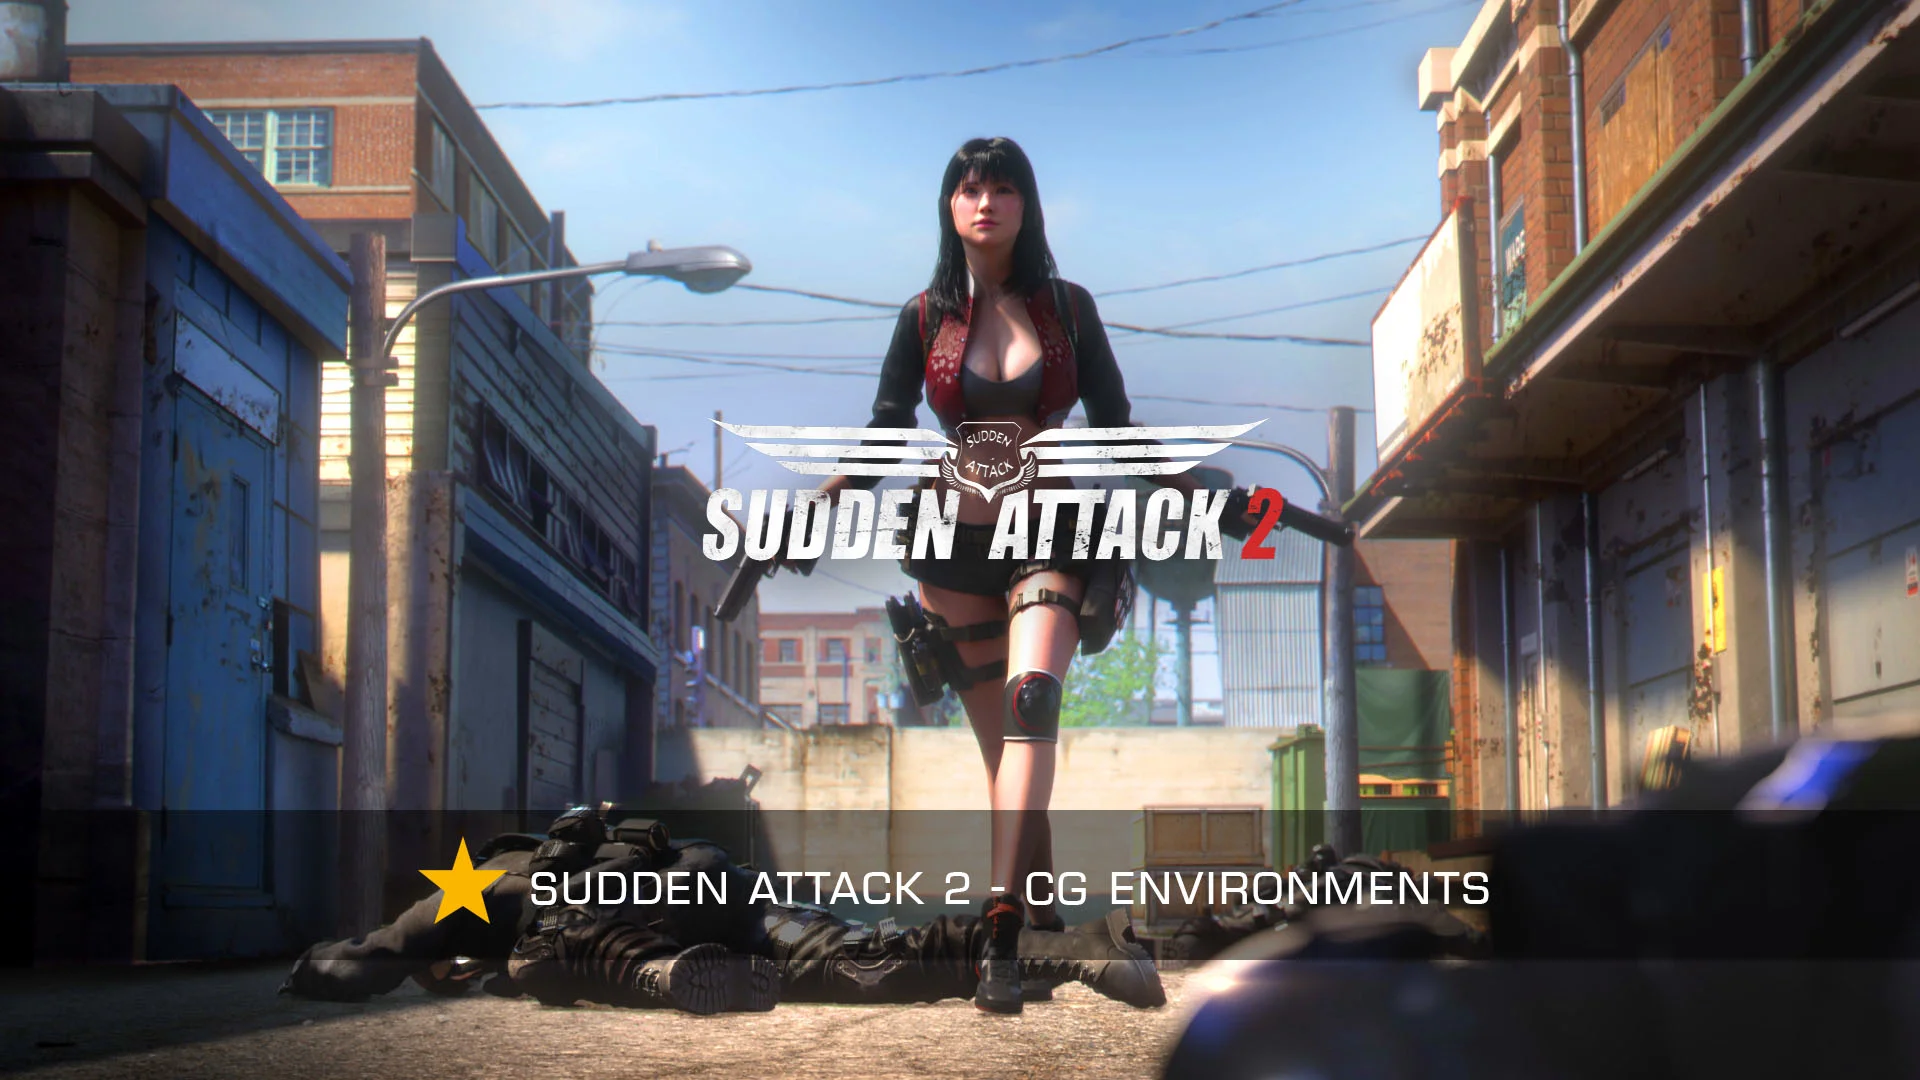 Sudden Attack 2 - CG Environments on Vimeo